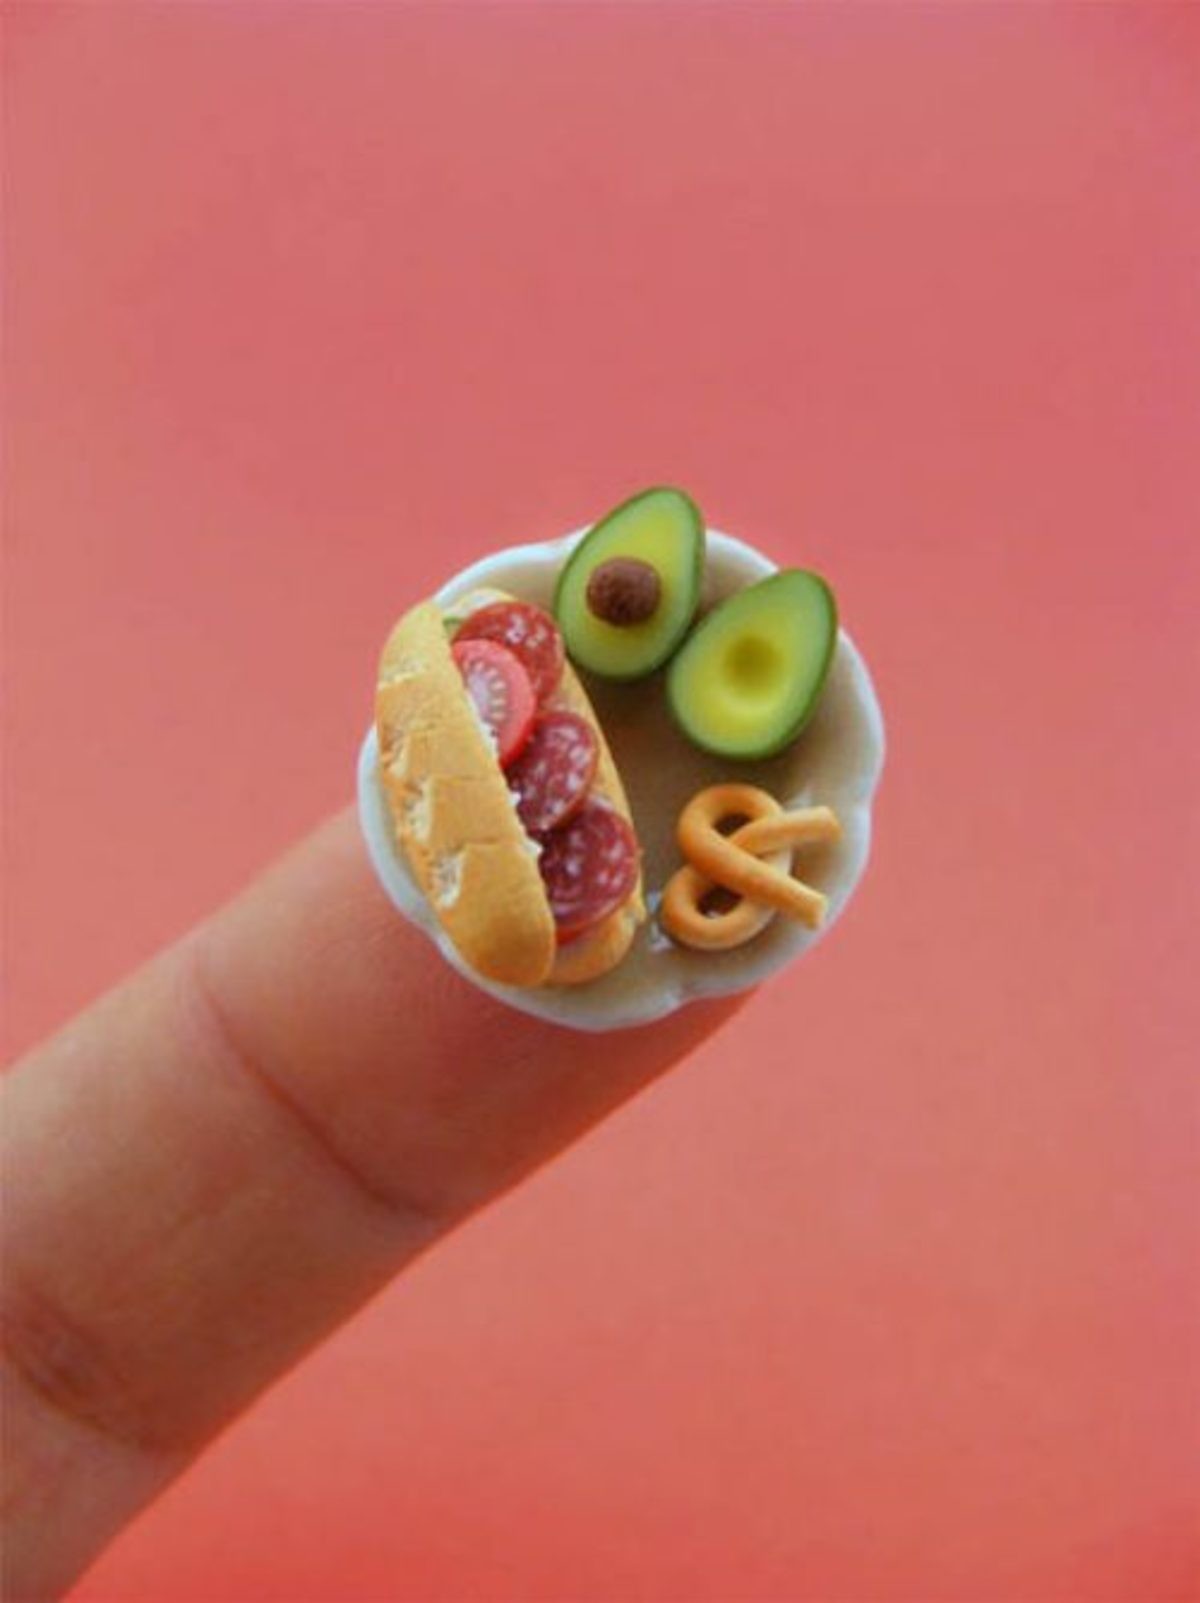 world's smallest hot dog